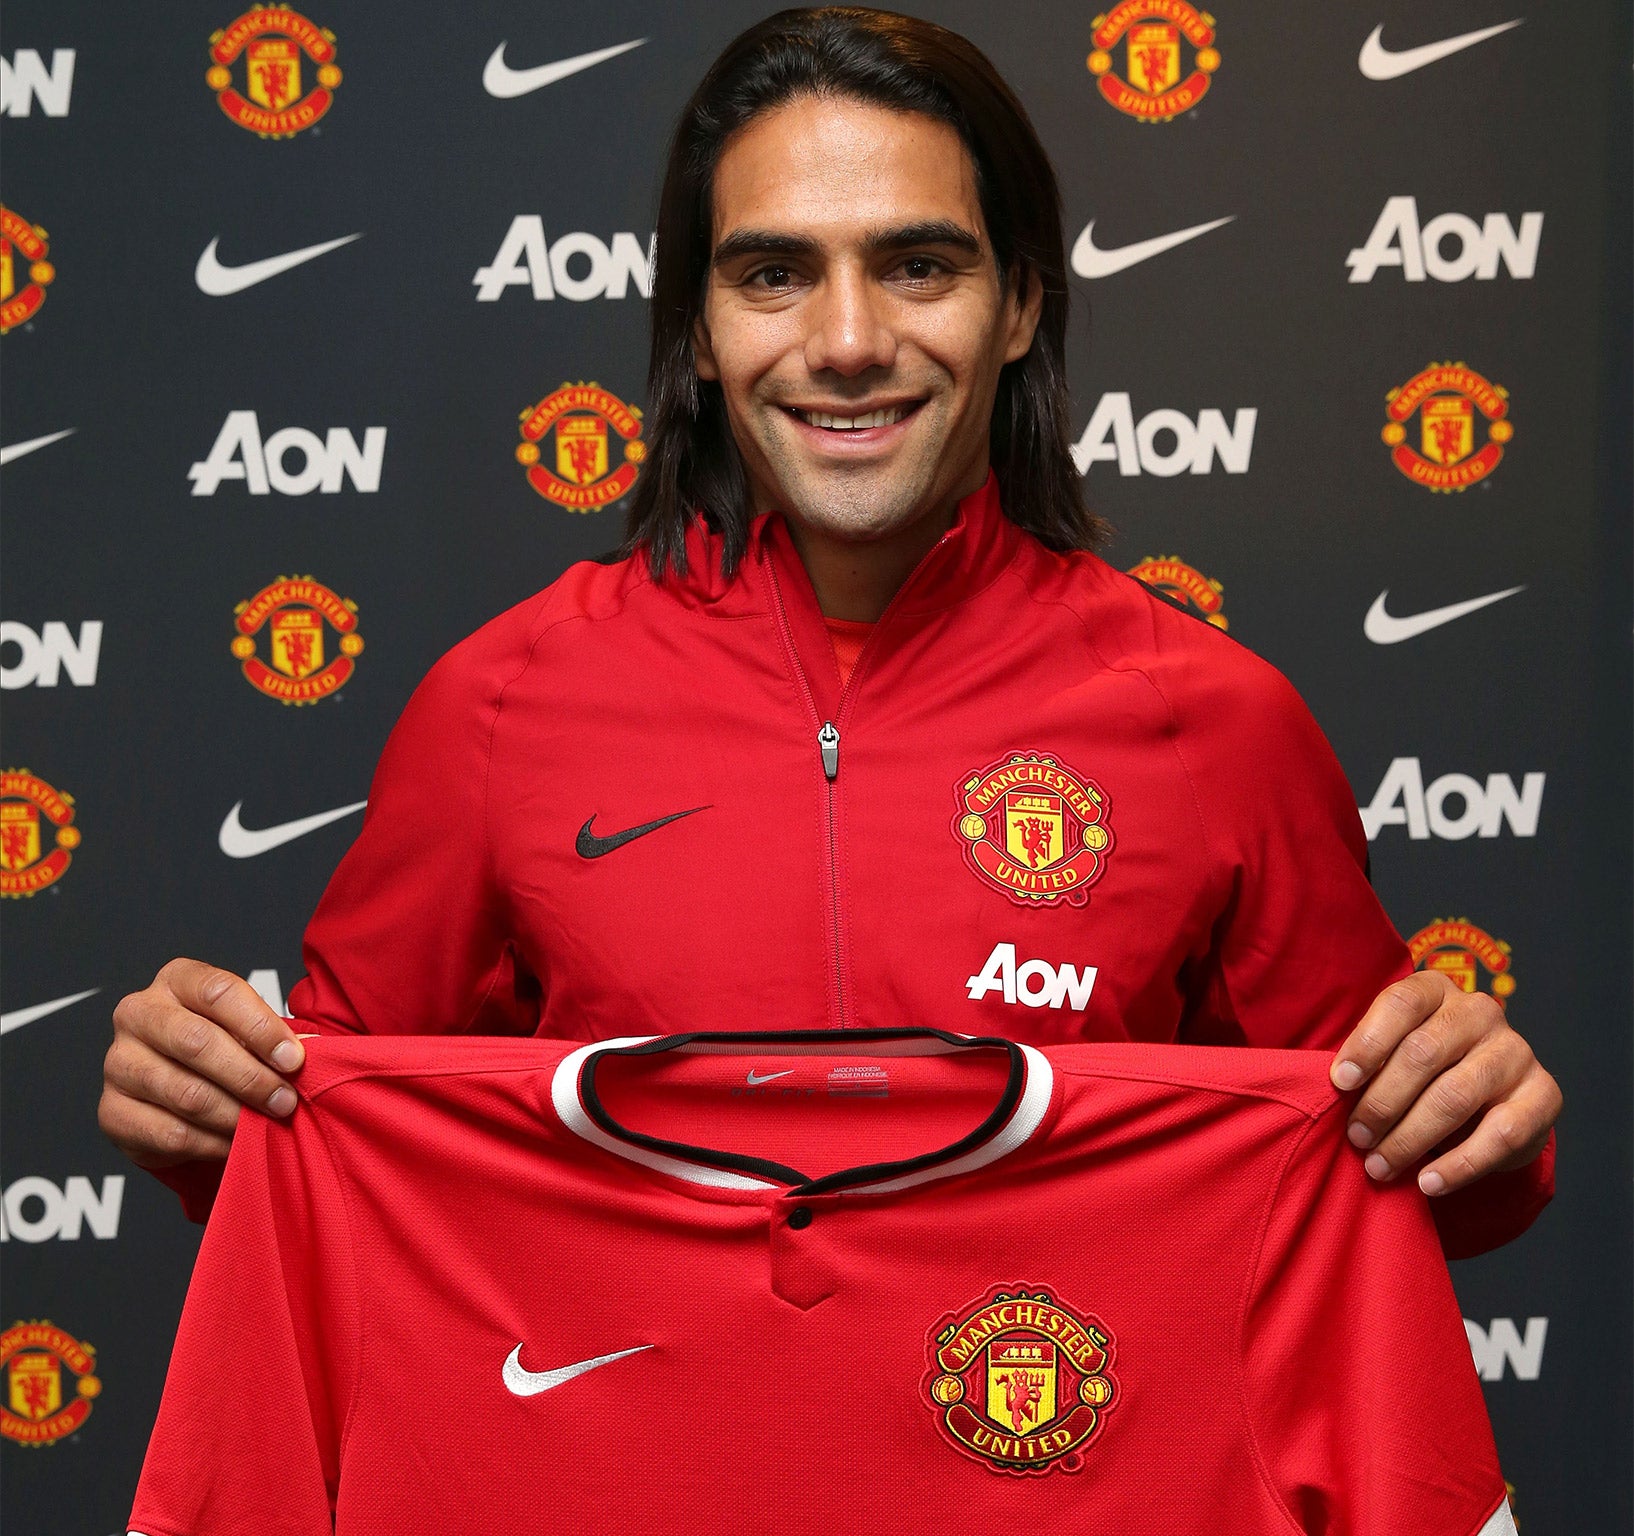 Radamel Falcao poses with his United shirt